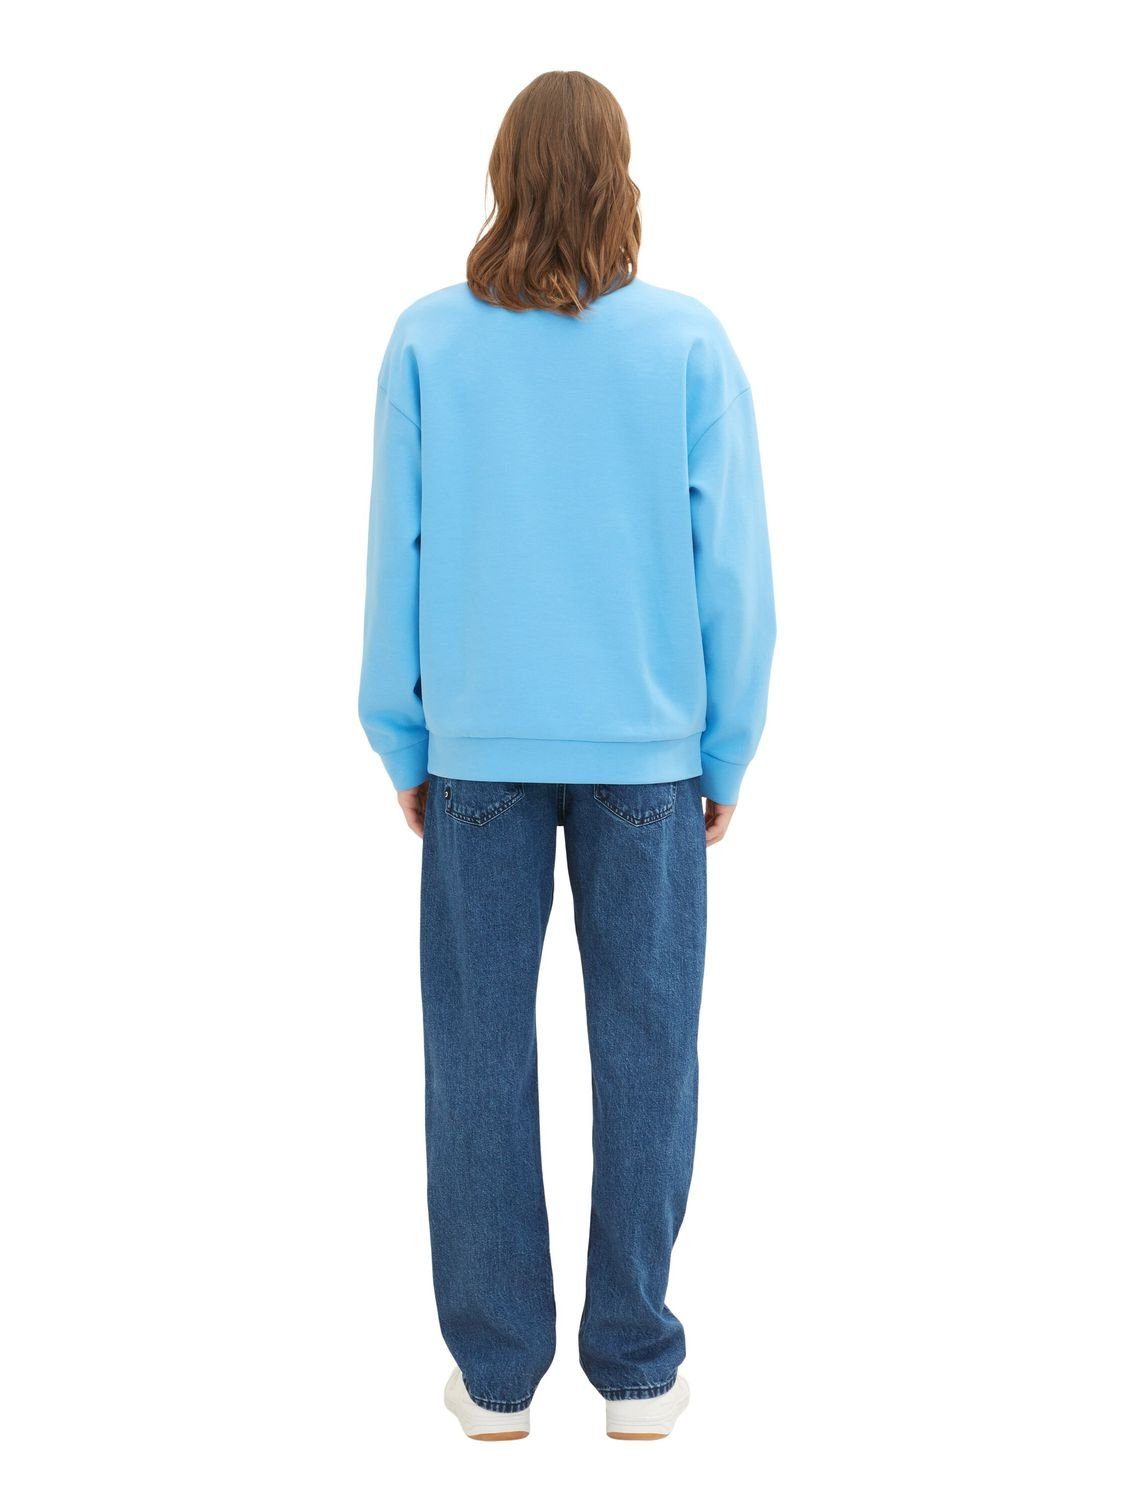 Denim Blue Sweatshirt 18395 aus RELAXED TAILOR Rainy Sky Baumwolle CREW TOM